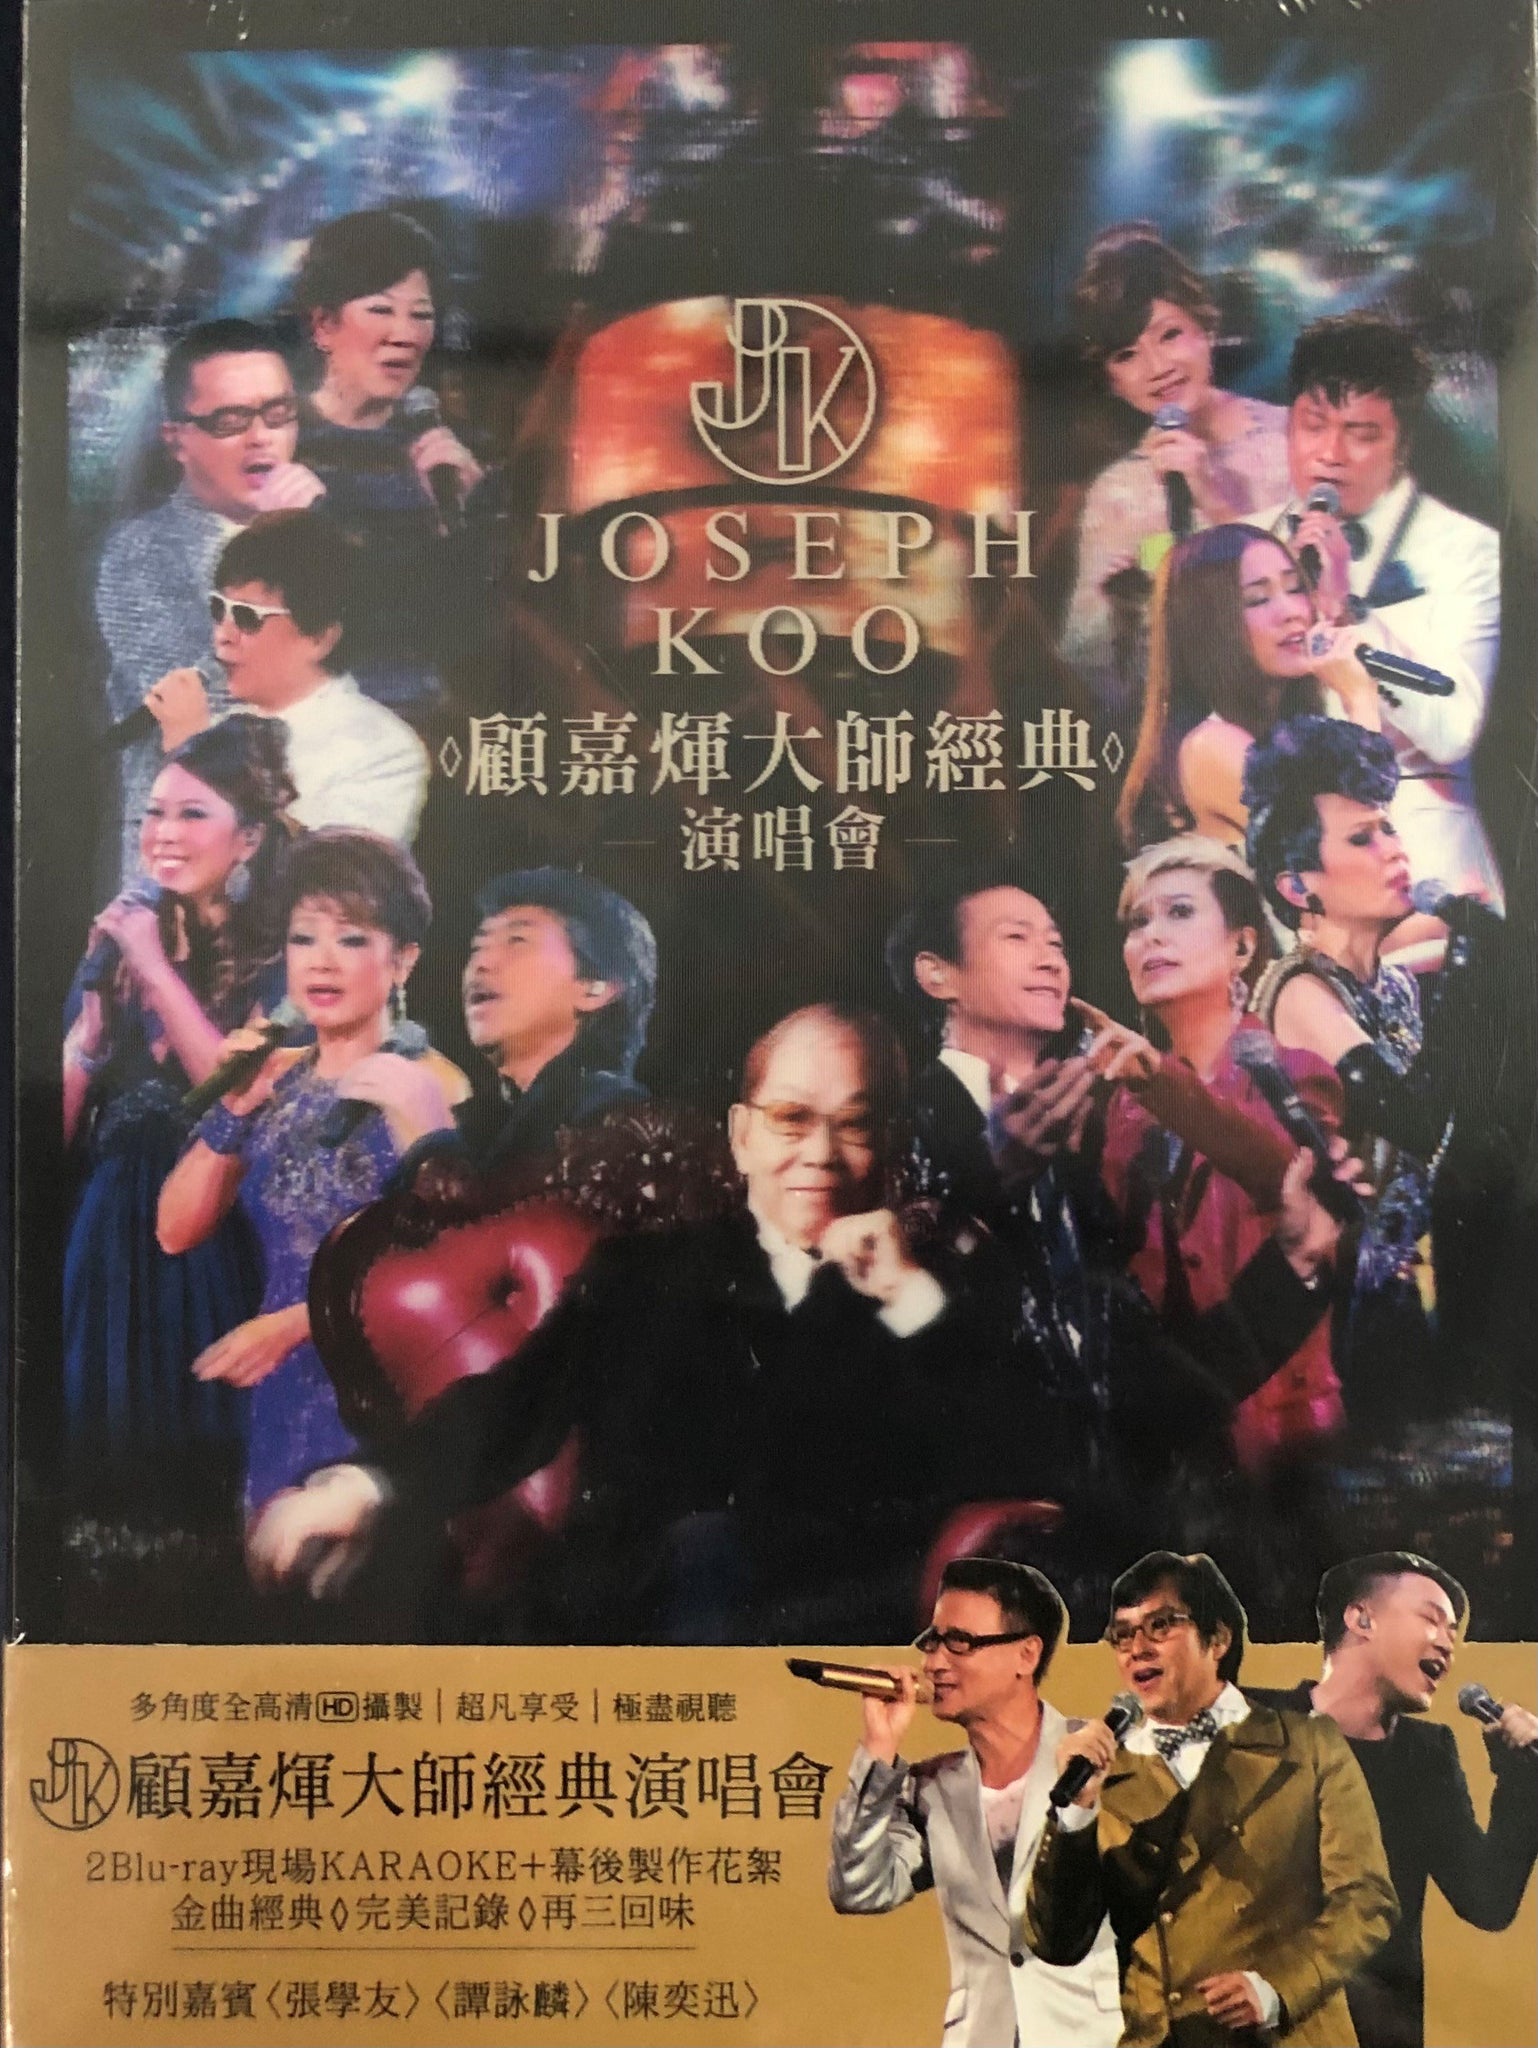 Joseph Koo Concert 2012 Karaoke 顧嘉煇大師經典演唱會 ( 2X BLU-RAY) Region Free